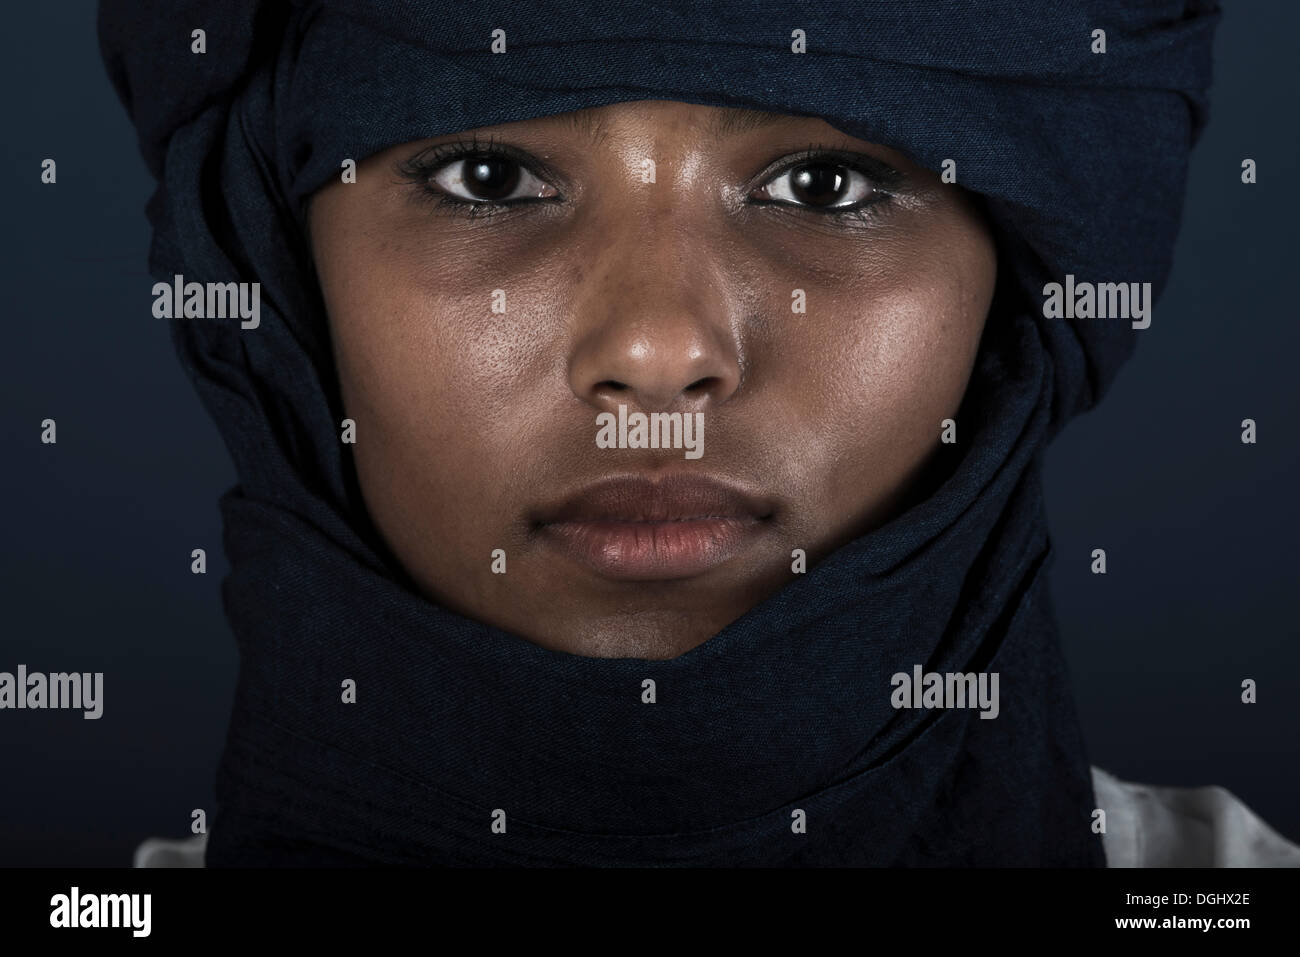 Tuareg girl, Targia, veiled with a chech, portrait, Algeria, North Africa, Africa Stock Photo